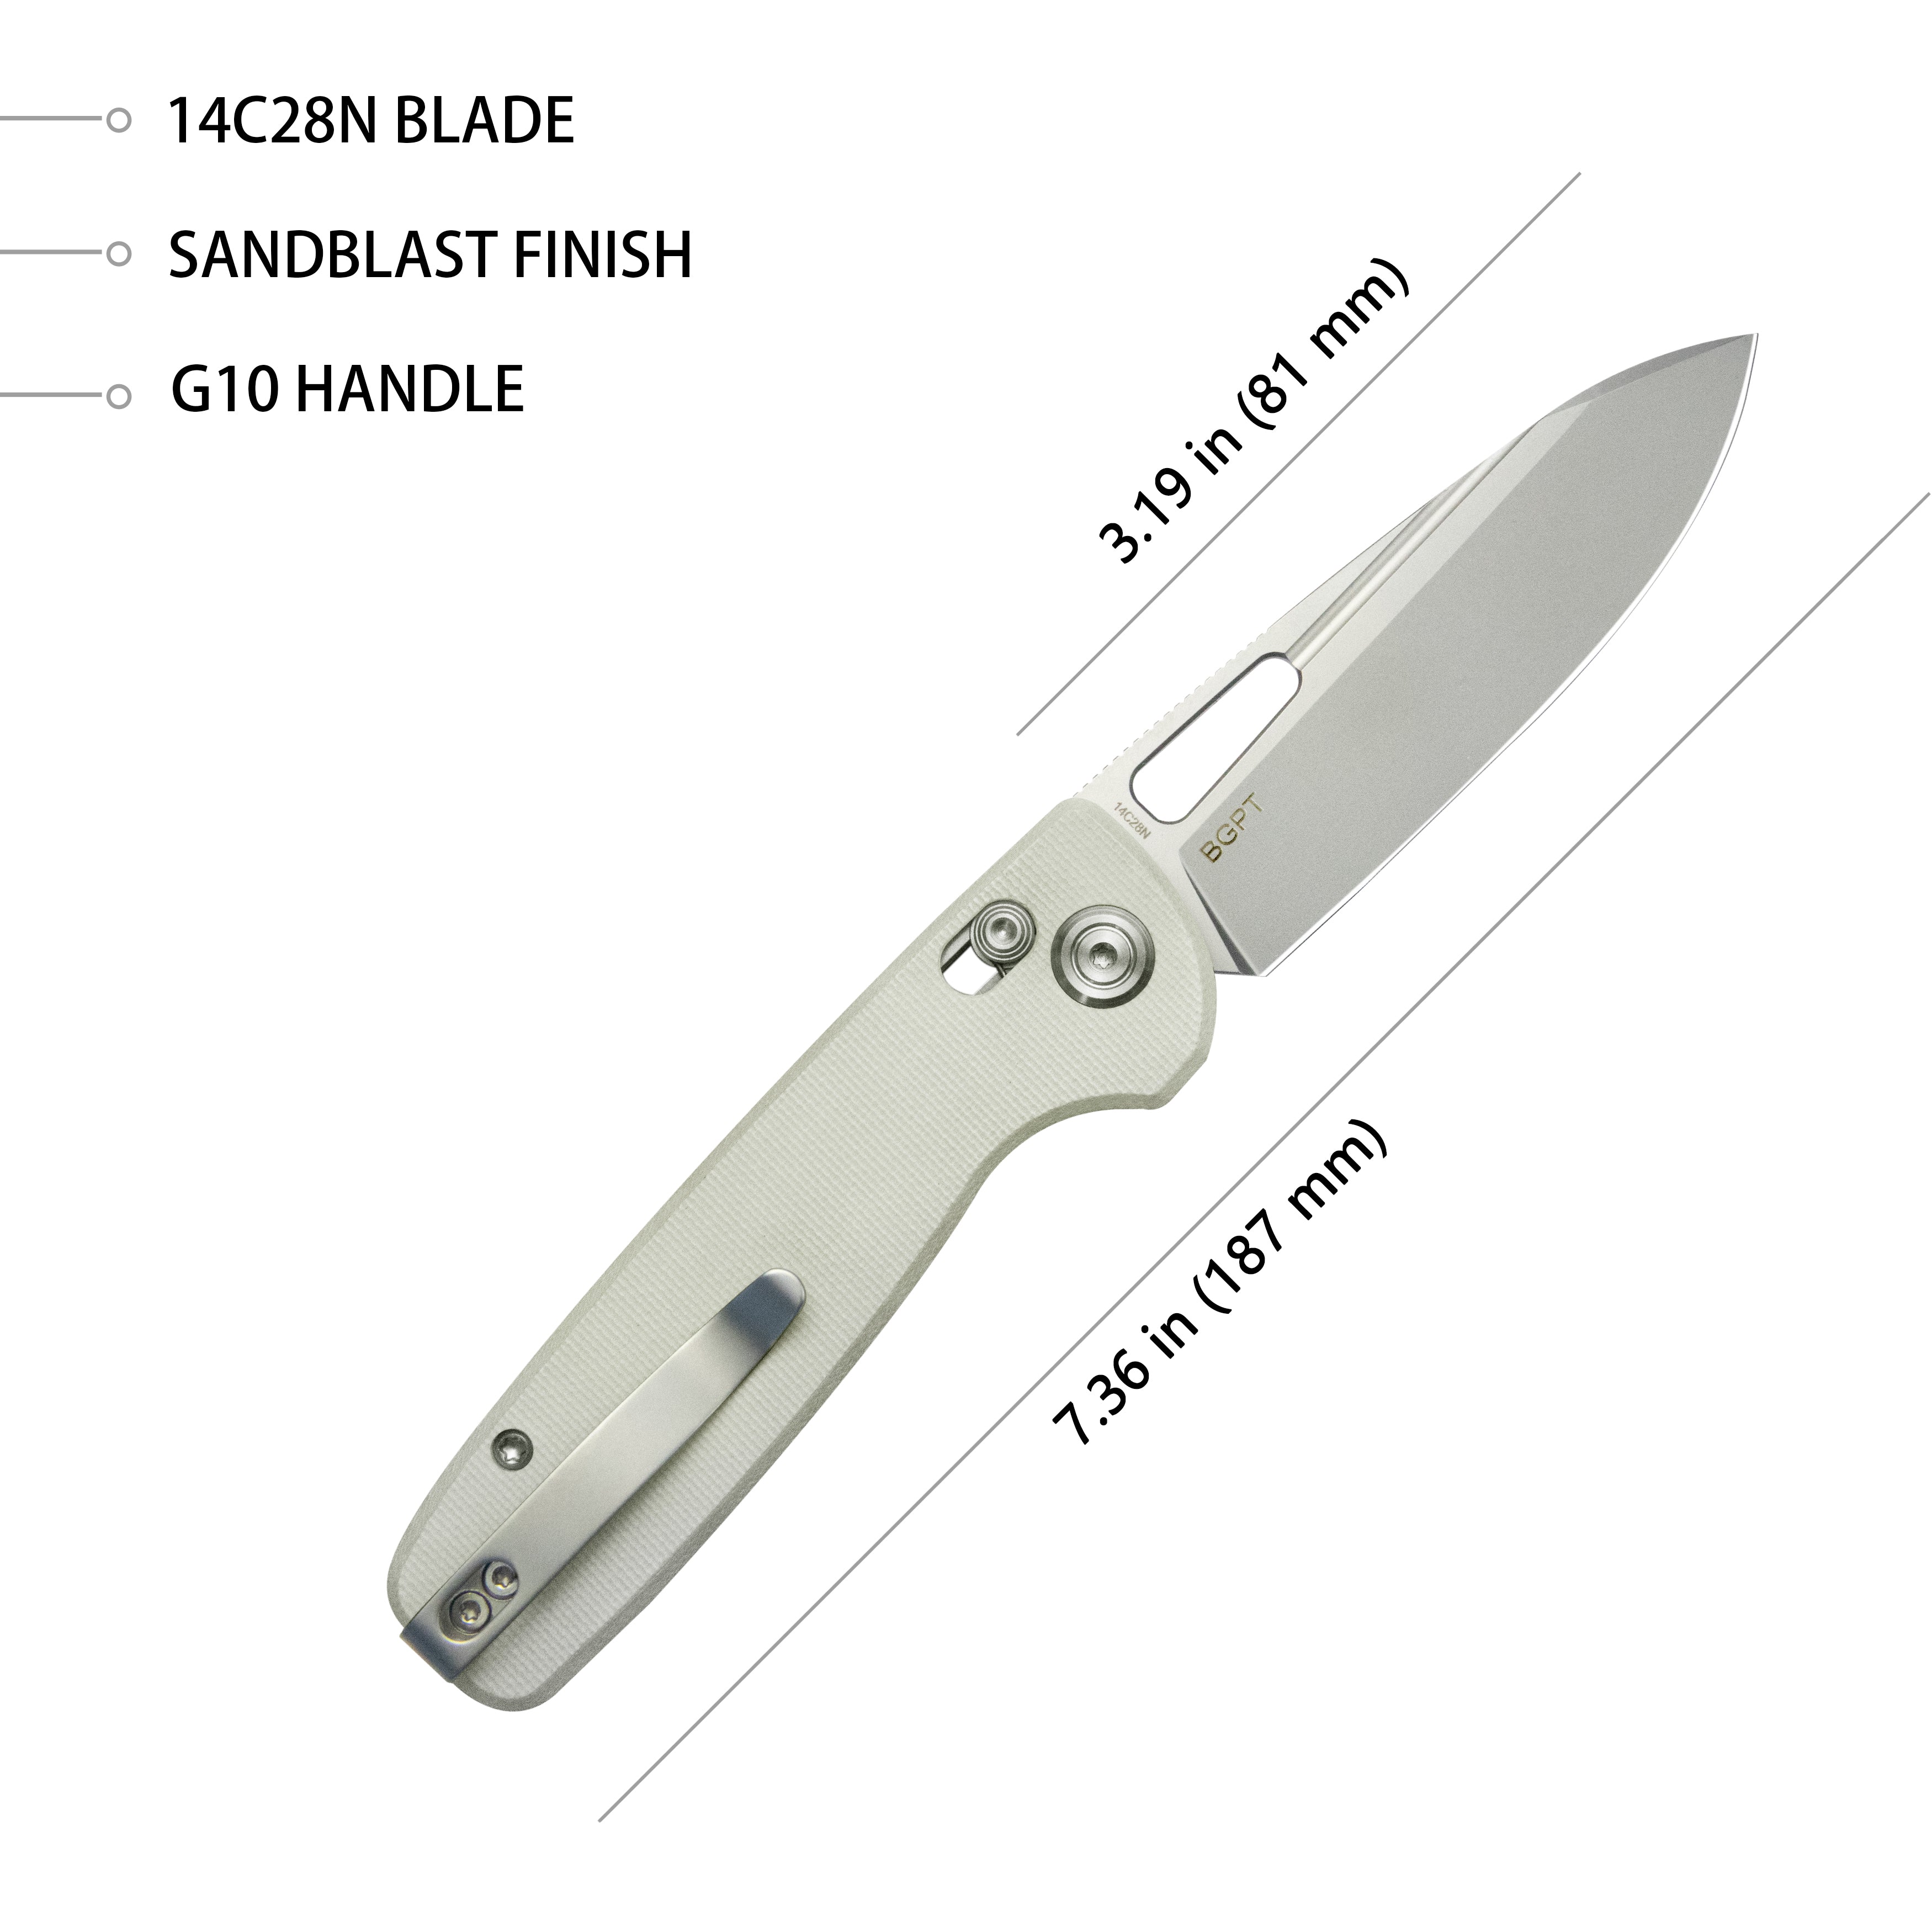 Kubey Bluff Crossbar lock Everyday Carry Pocket Folding Knife White G-10 Handle Sandblast 14C28N Blade KU248C